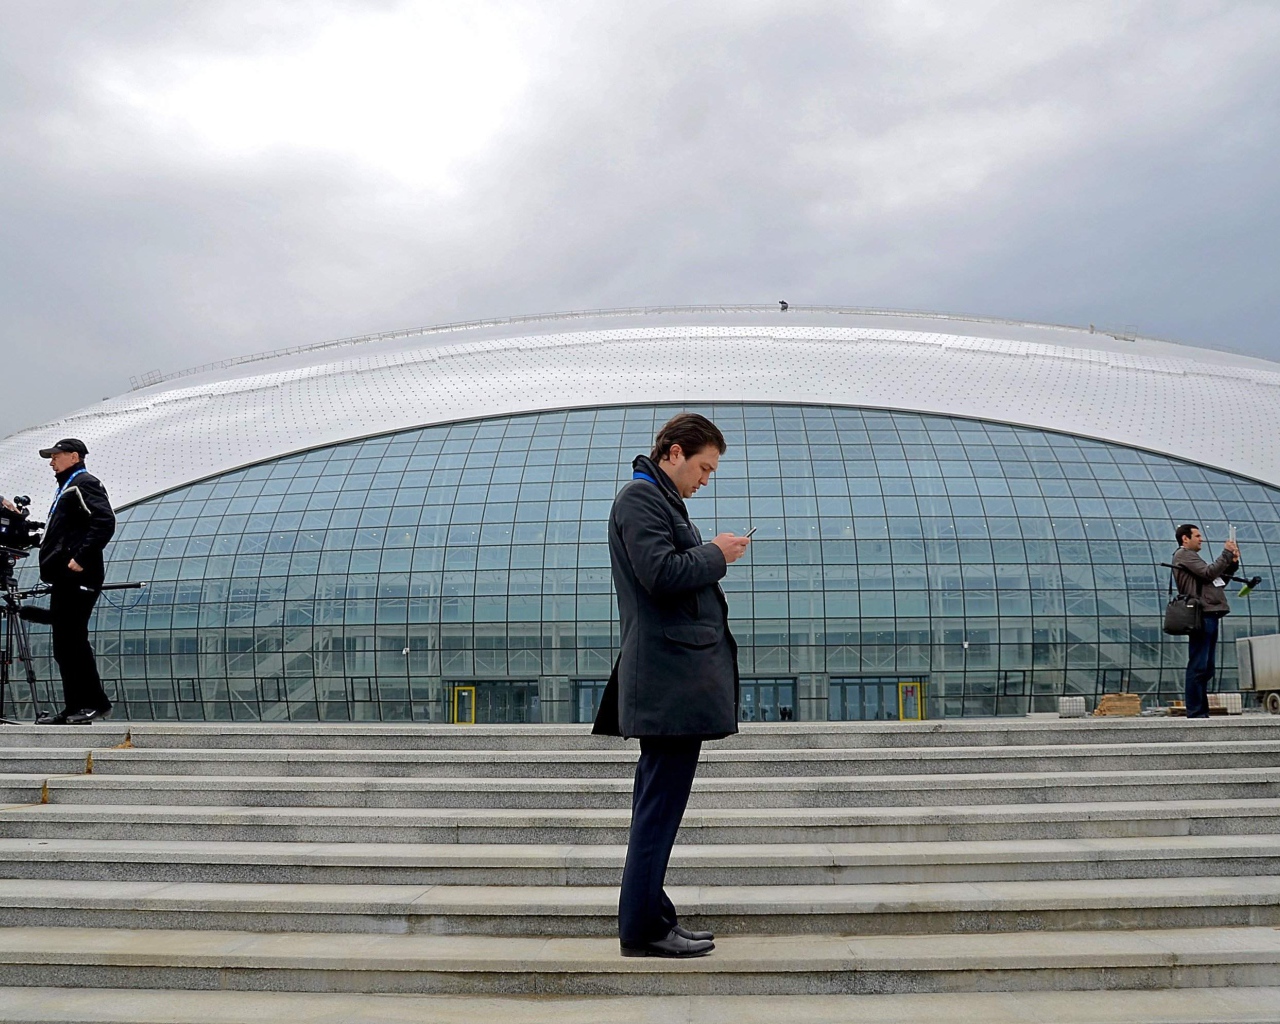 Стадион к Олимпиаде в Сочи 2014